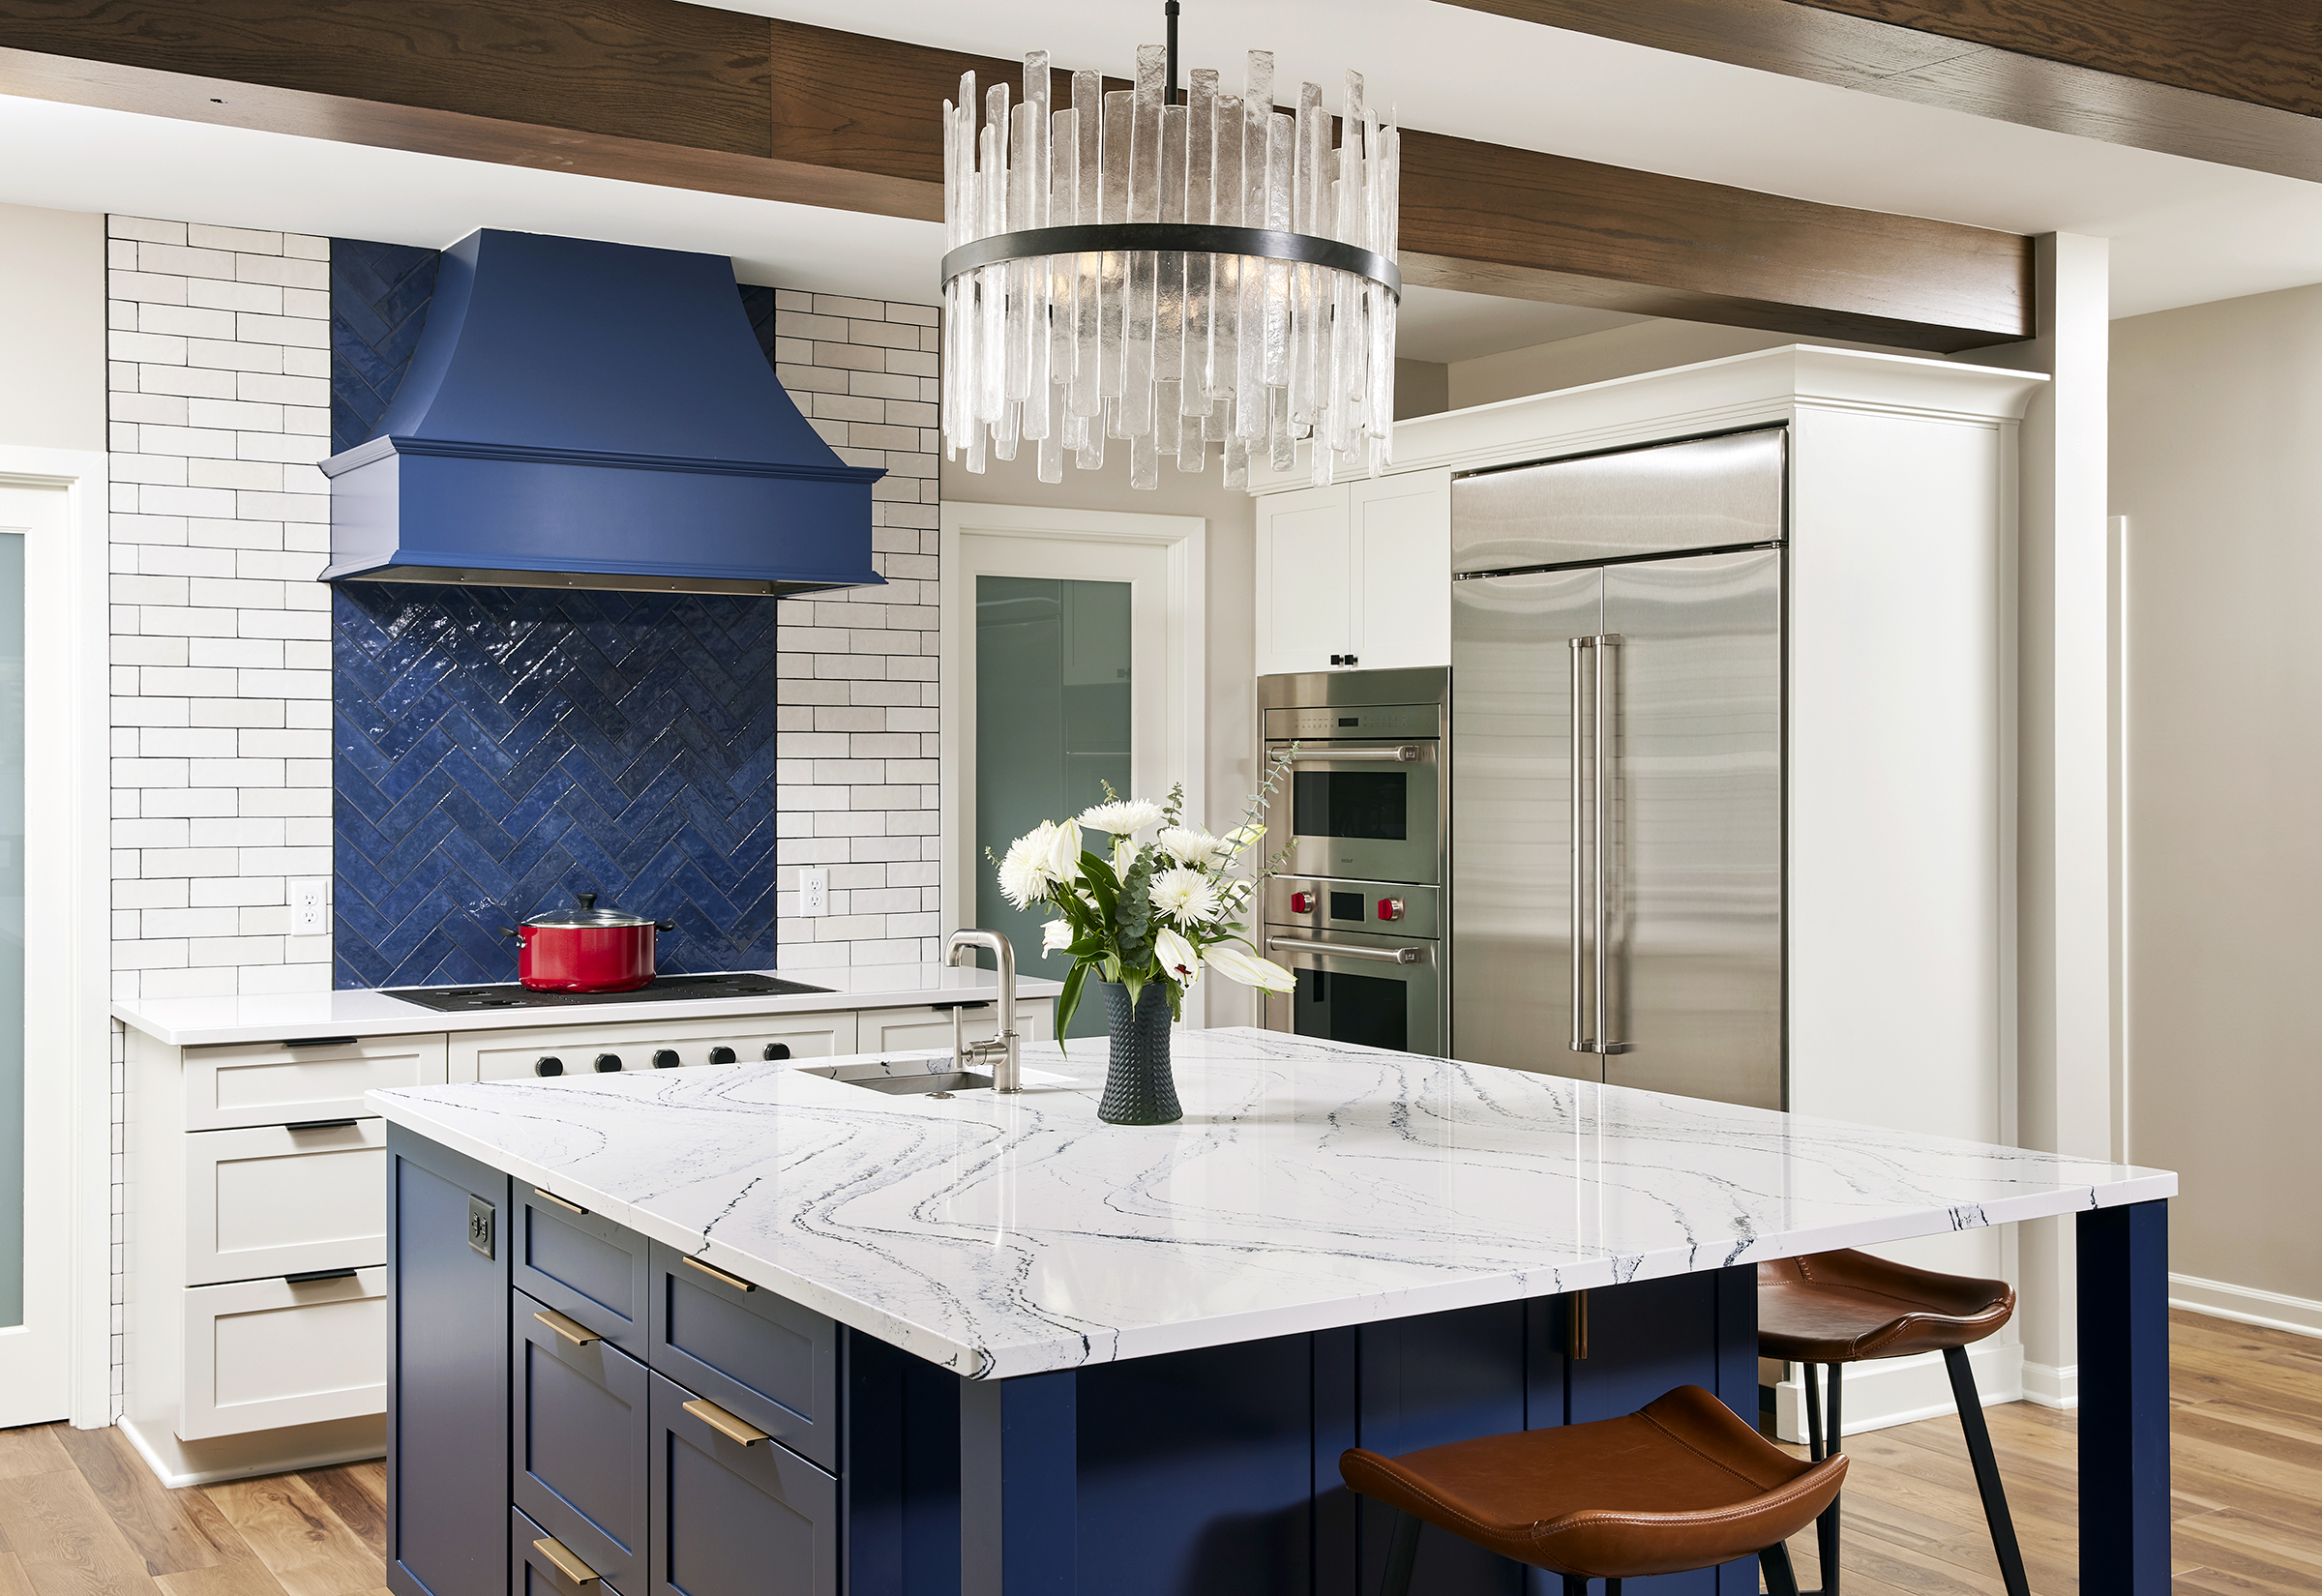 kitchen remodel with large, white square island, rich blue cabinetry, glazed blue backsplash tile and range hood, two ovens, fridge and island seating